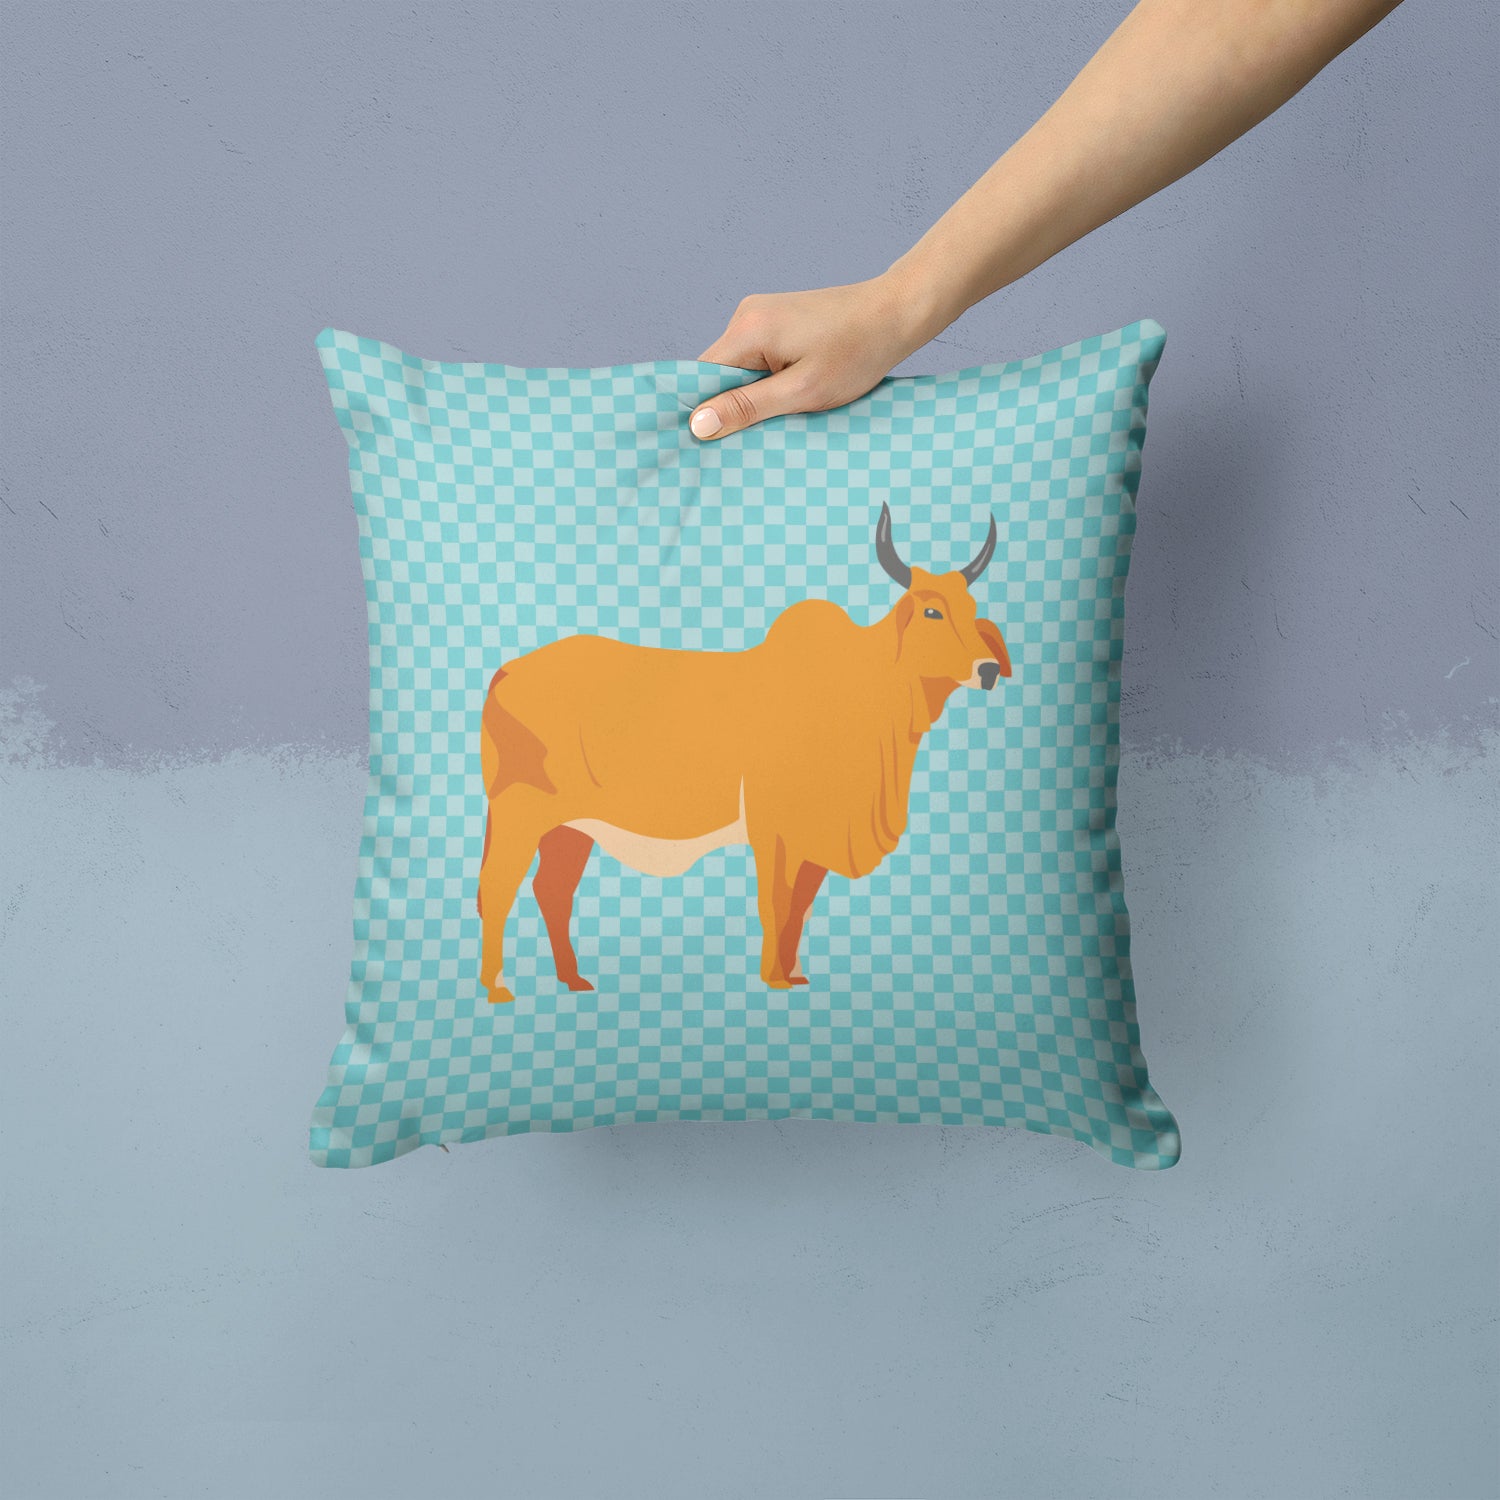 Zebu Indicine Cow Blue Check Fabric Decorative Pillow BB7999PW1414 - the-store.com